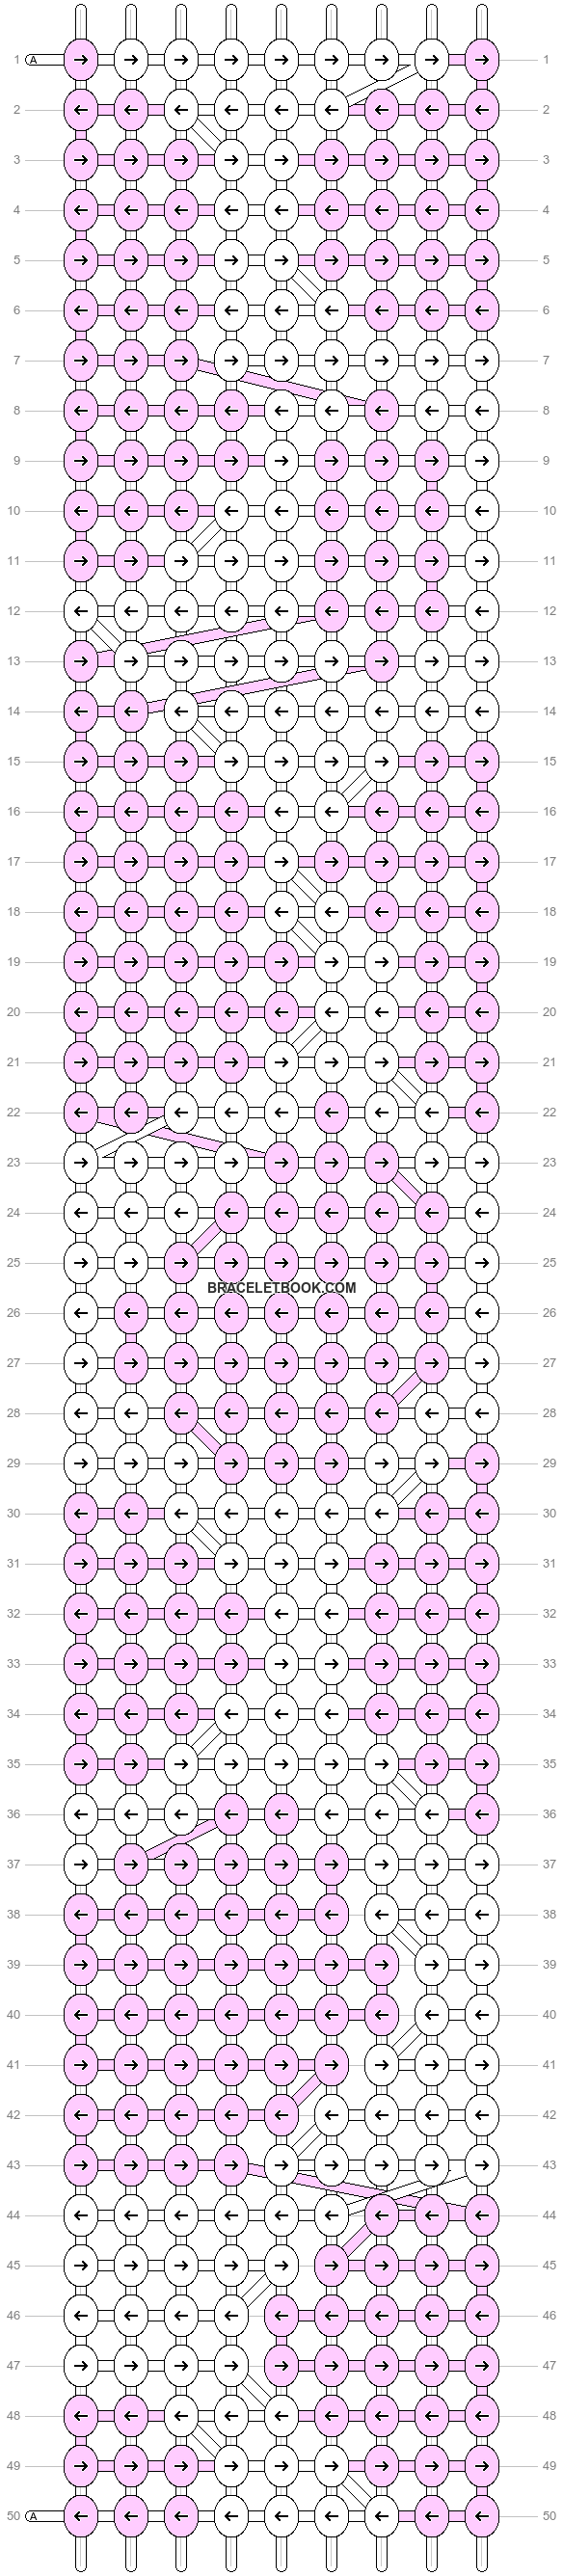 Alpha pattern #51266 variation #81923 pattern